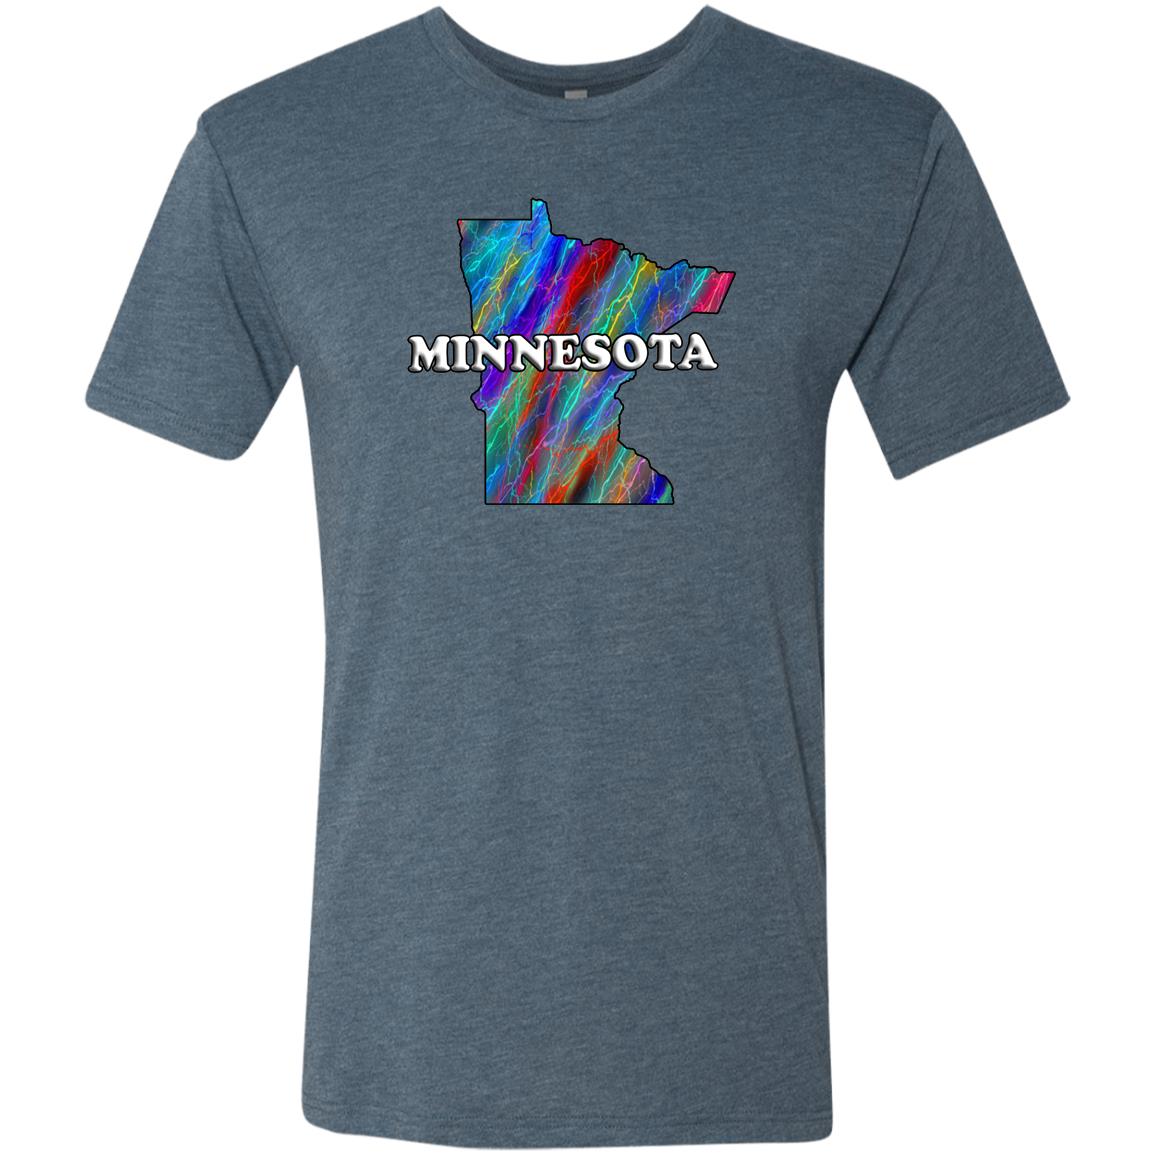 Minnesota State T-Shirt